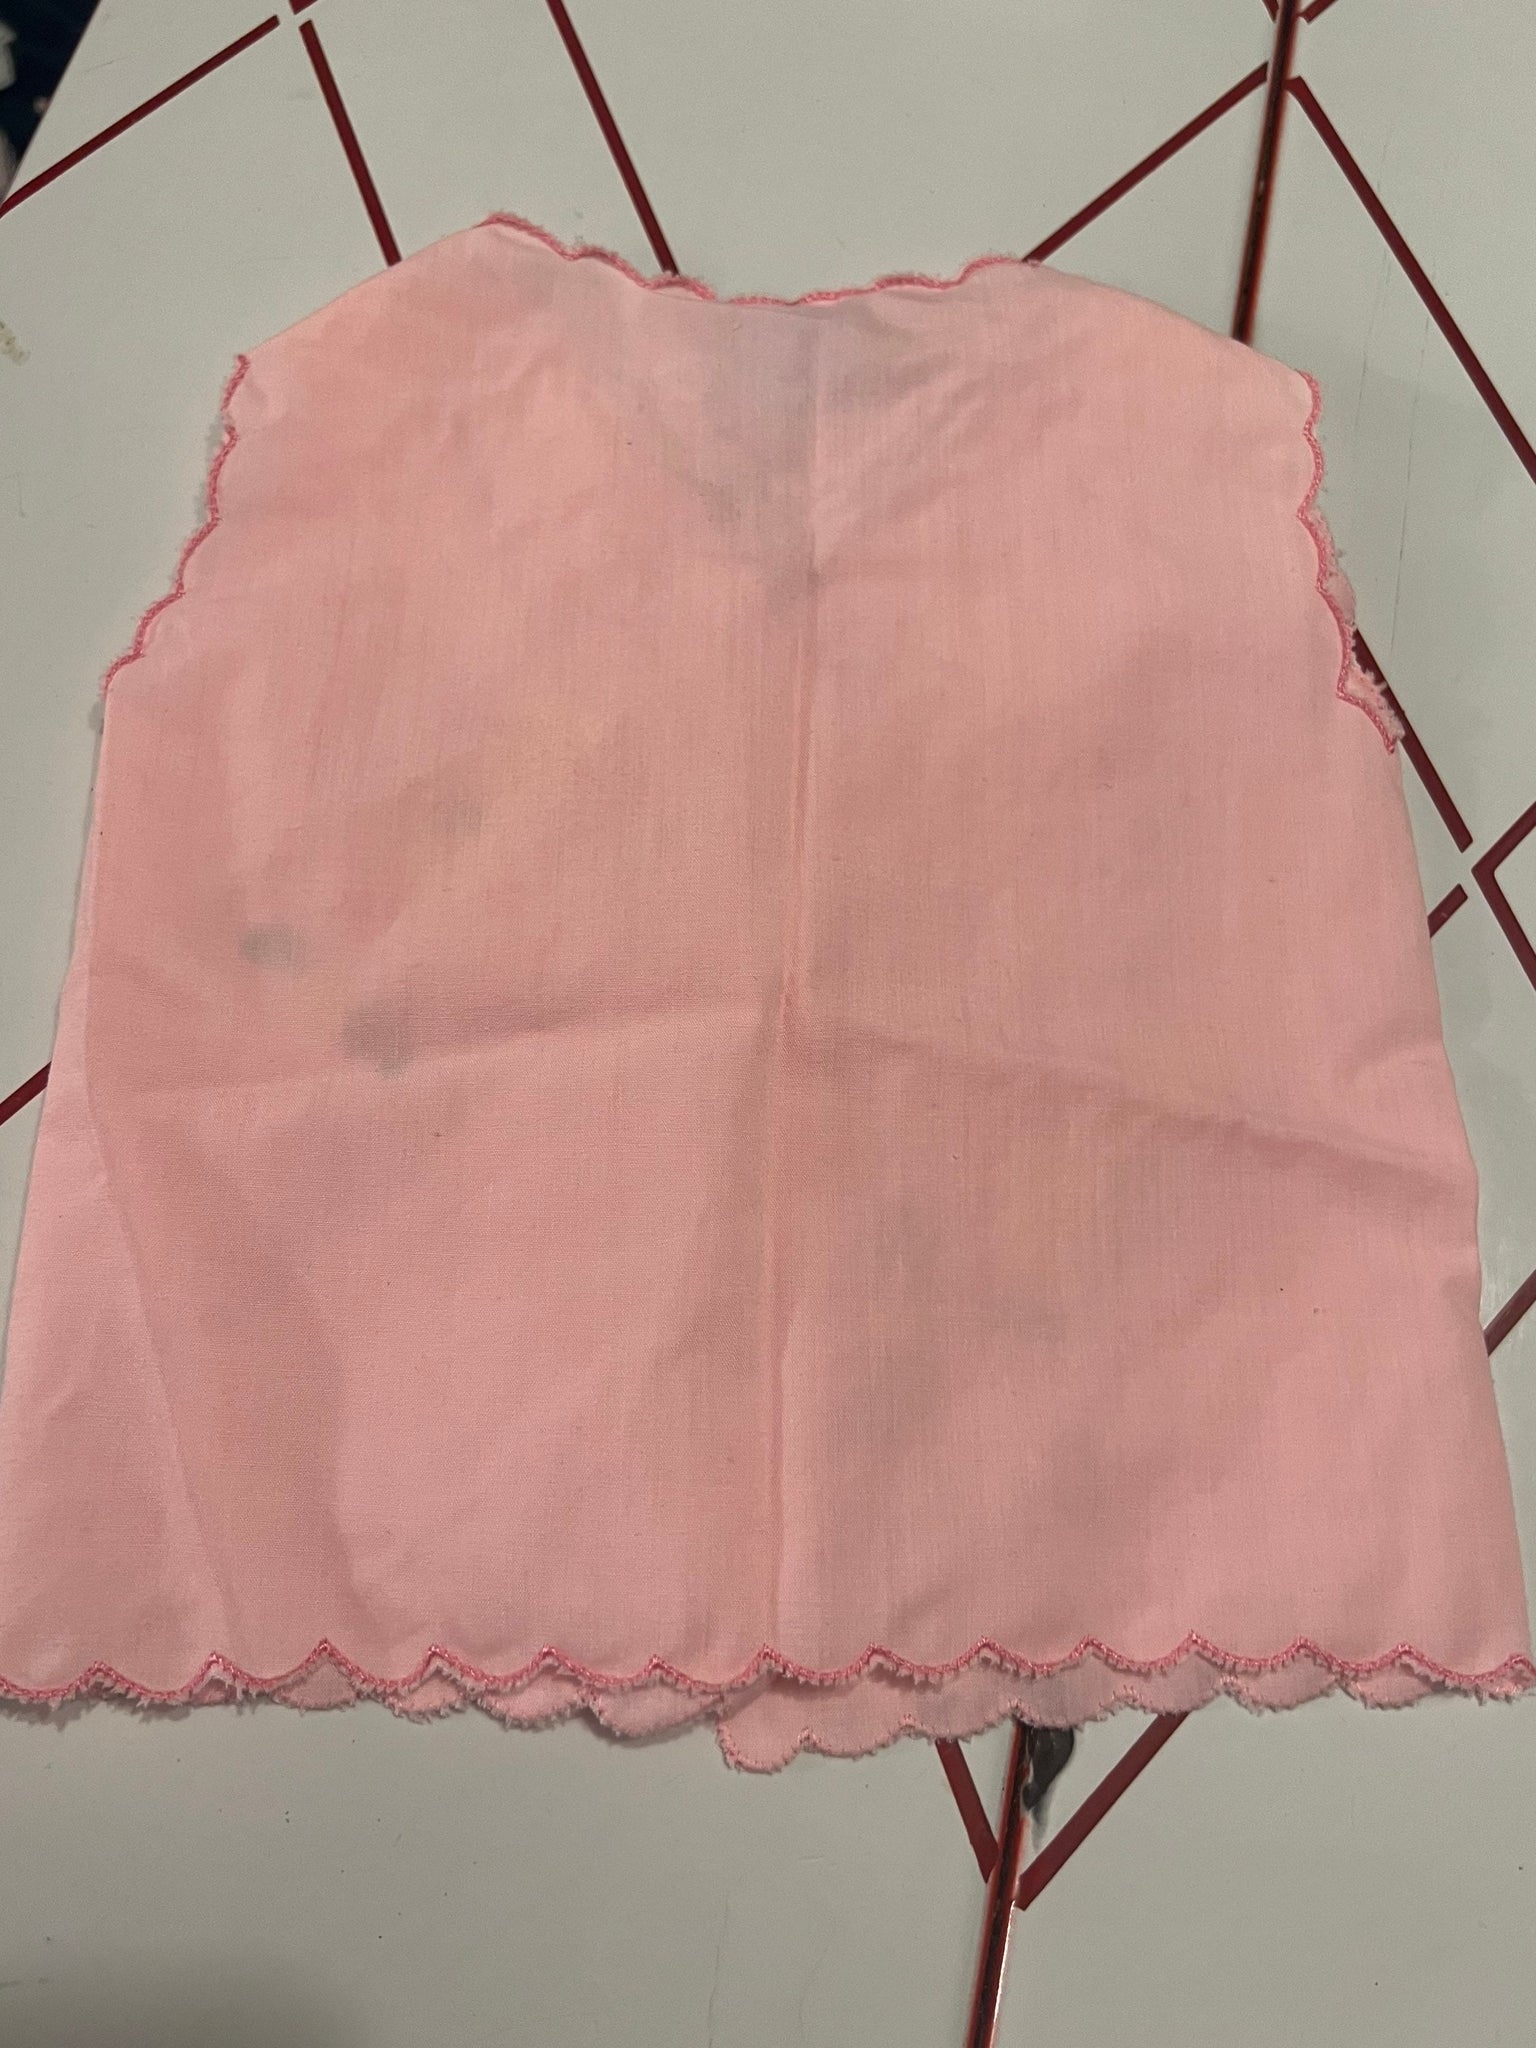 Vintage Mon Petit pink diaper shirt 0-6 month